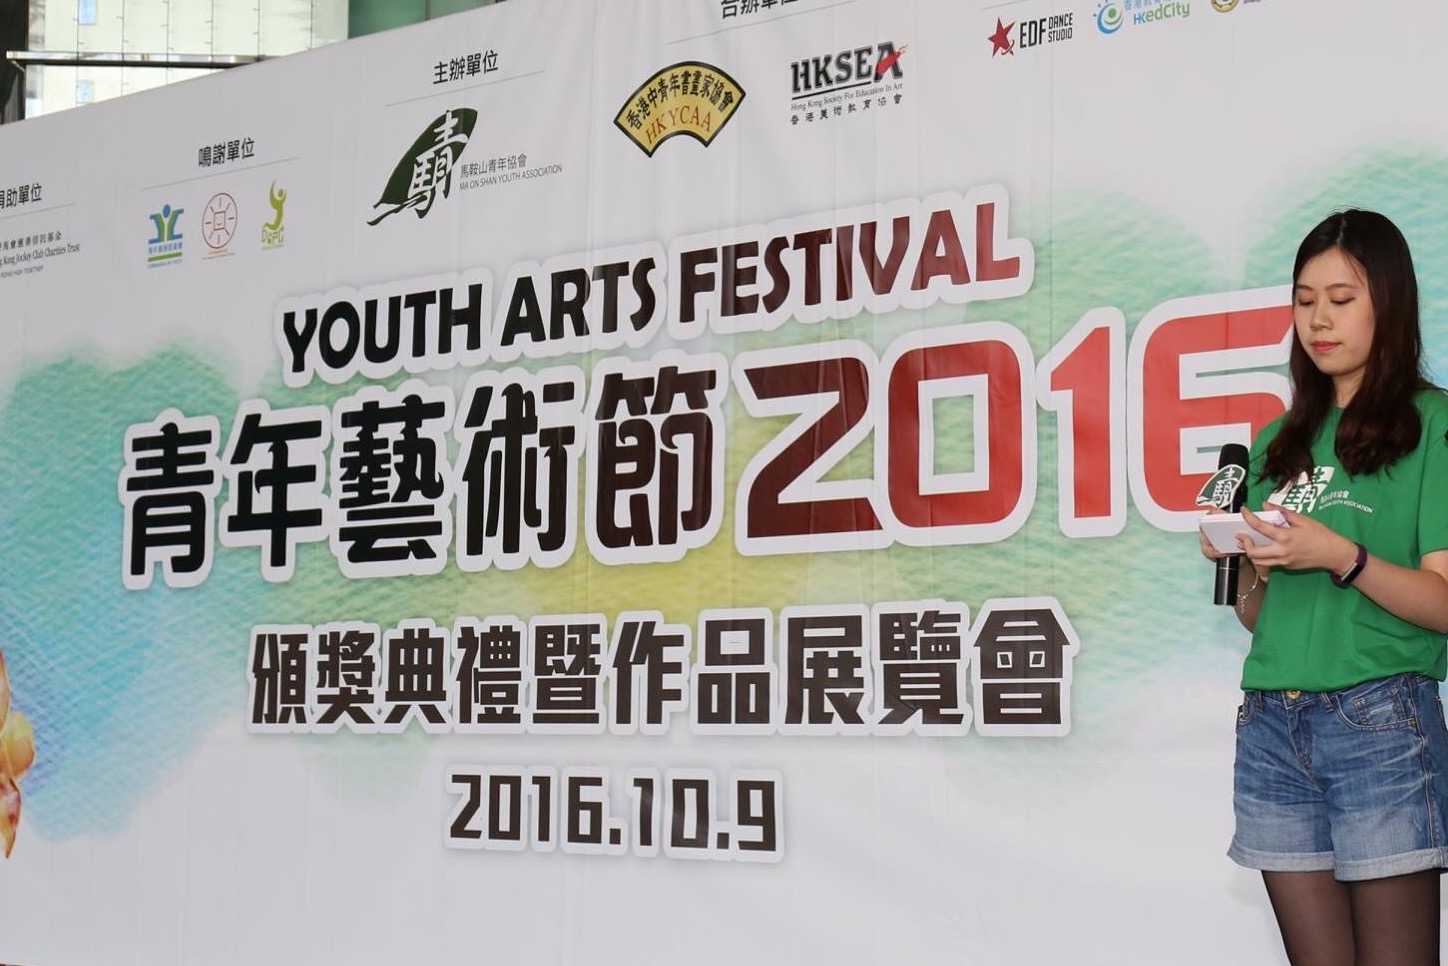 Angela Wu之司儀主持紀錄: 青年藝術節2016頒獎典禮暨作品展覽會